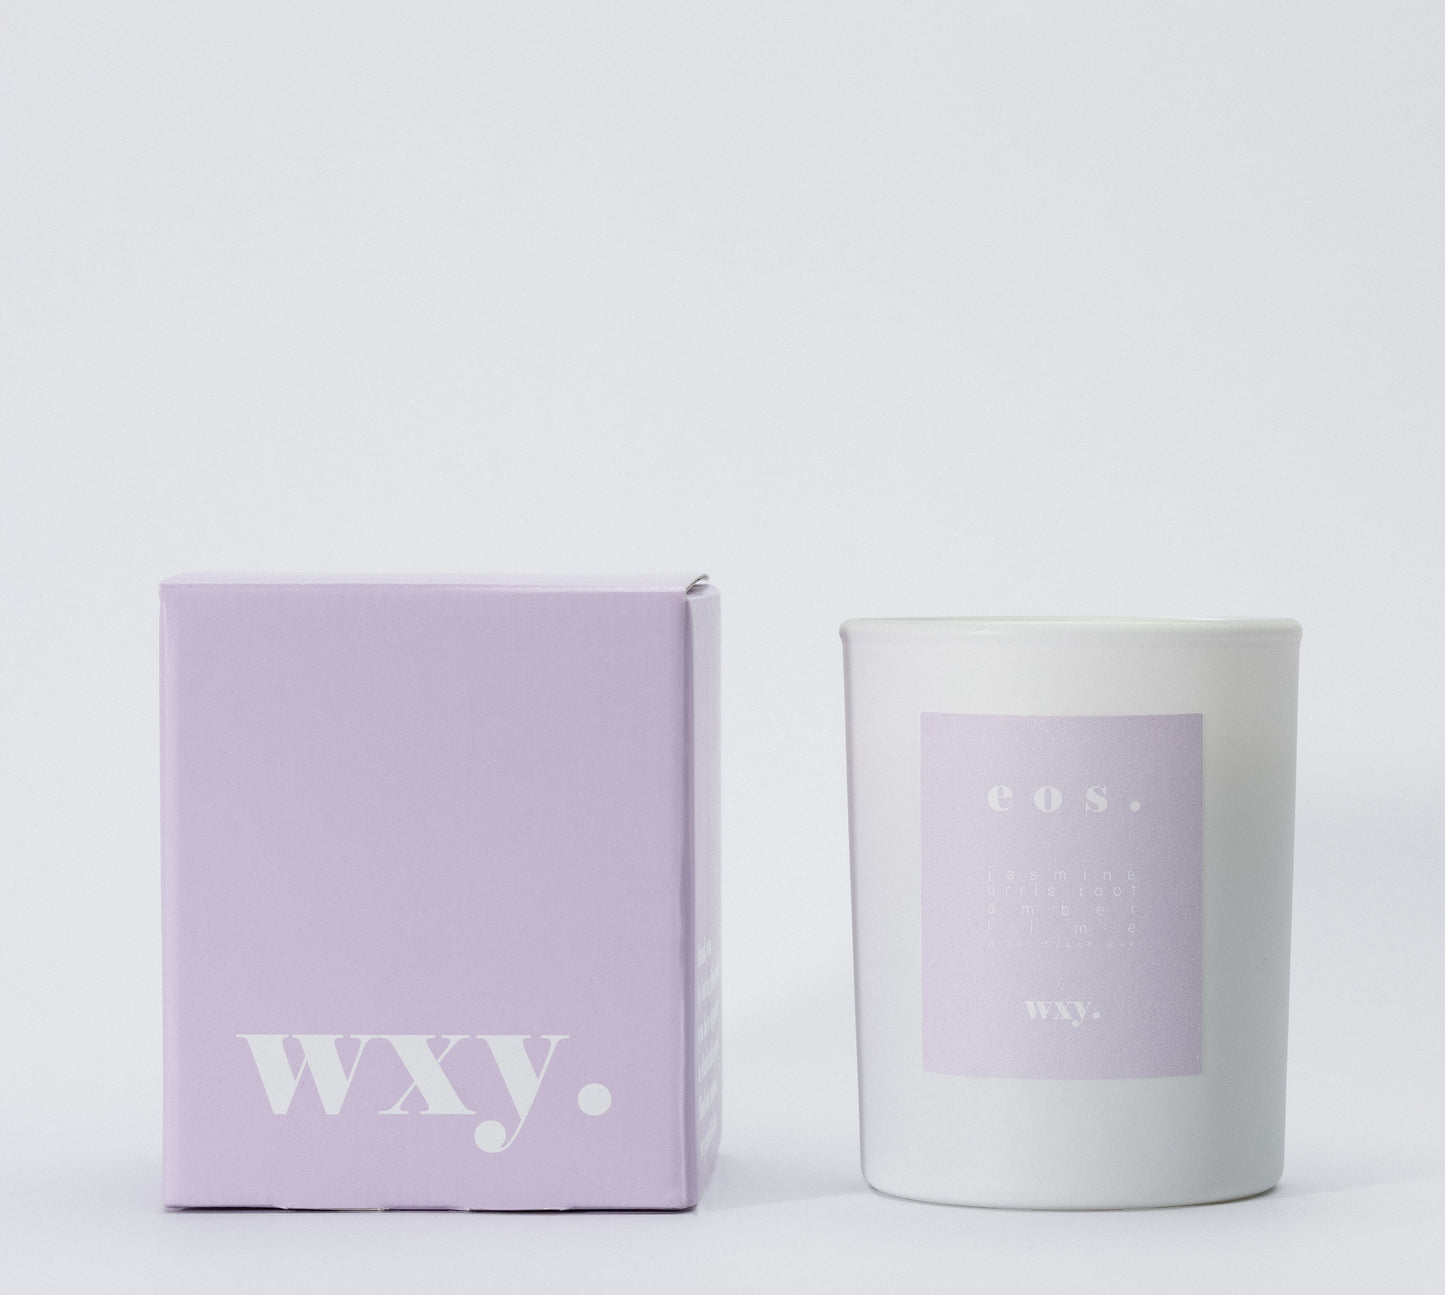 WXY Candles - Eos